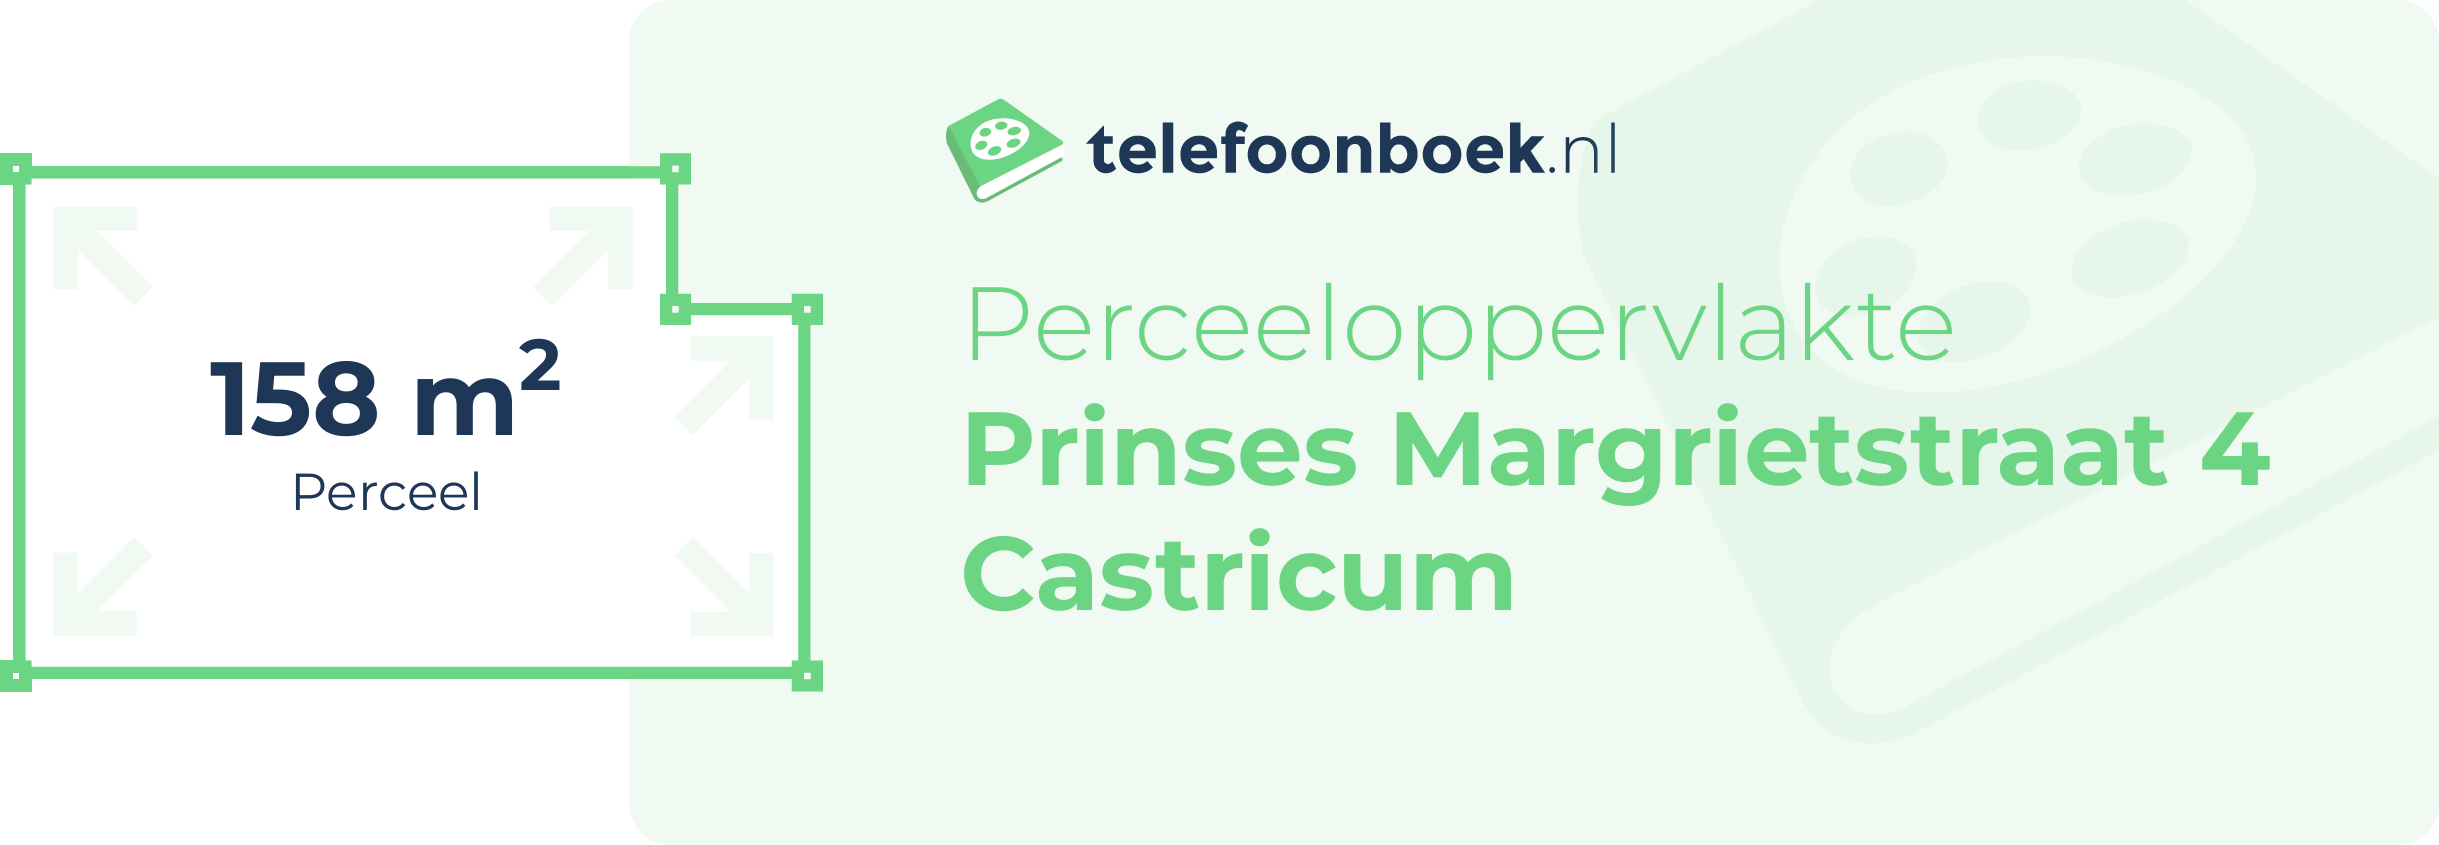 Perceeloppervlakte Prinses Margrietstraat 4 Castricum